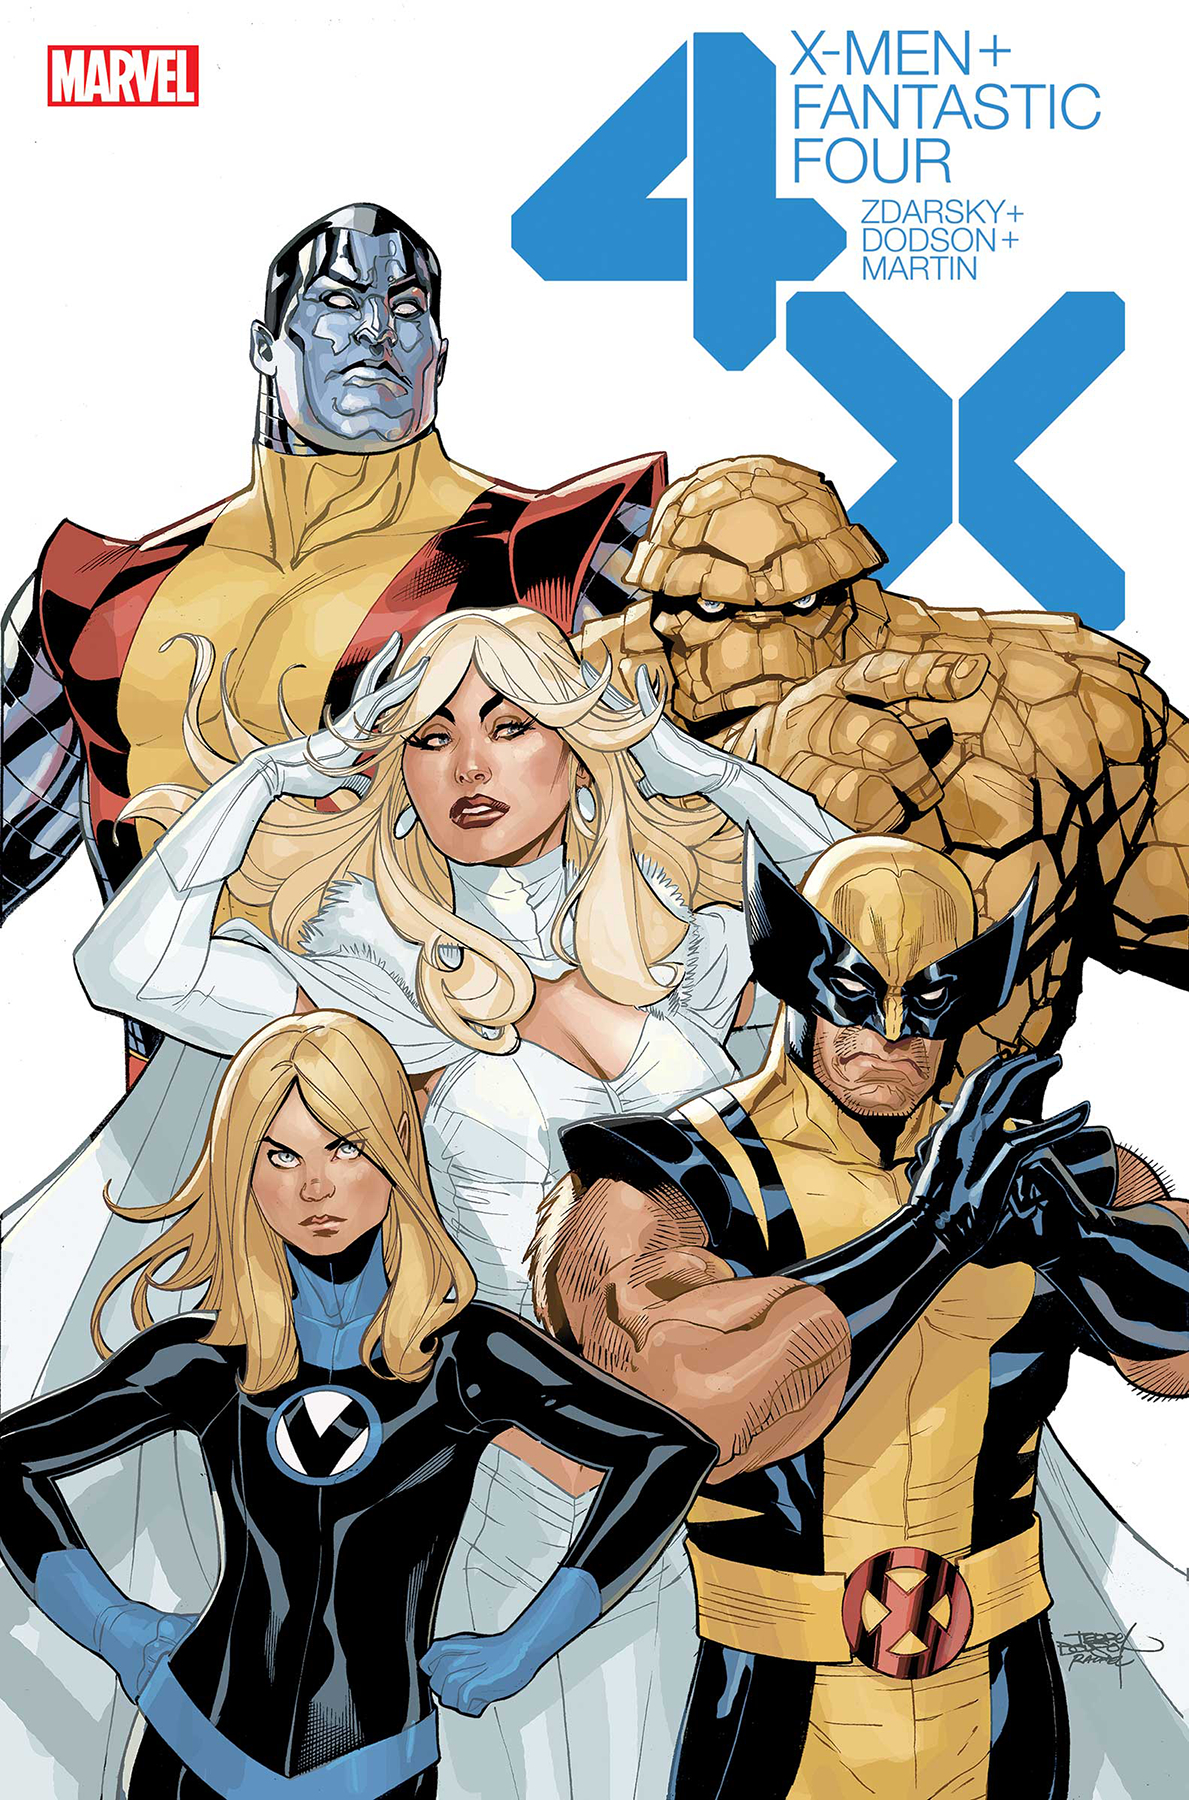 X-MEN FANTASTIC FOUR #2 (OF 4)